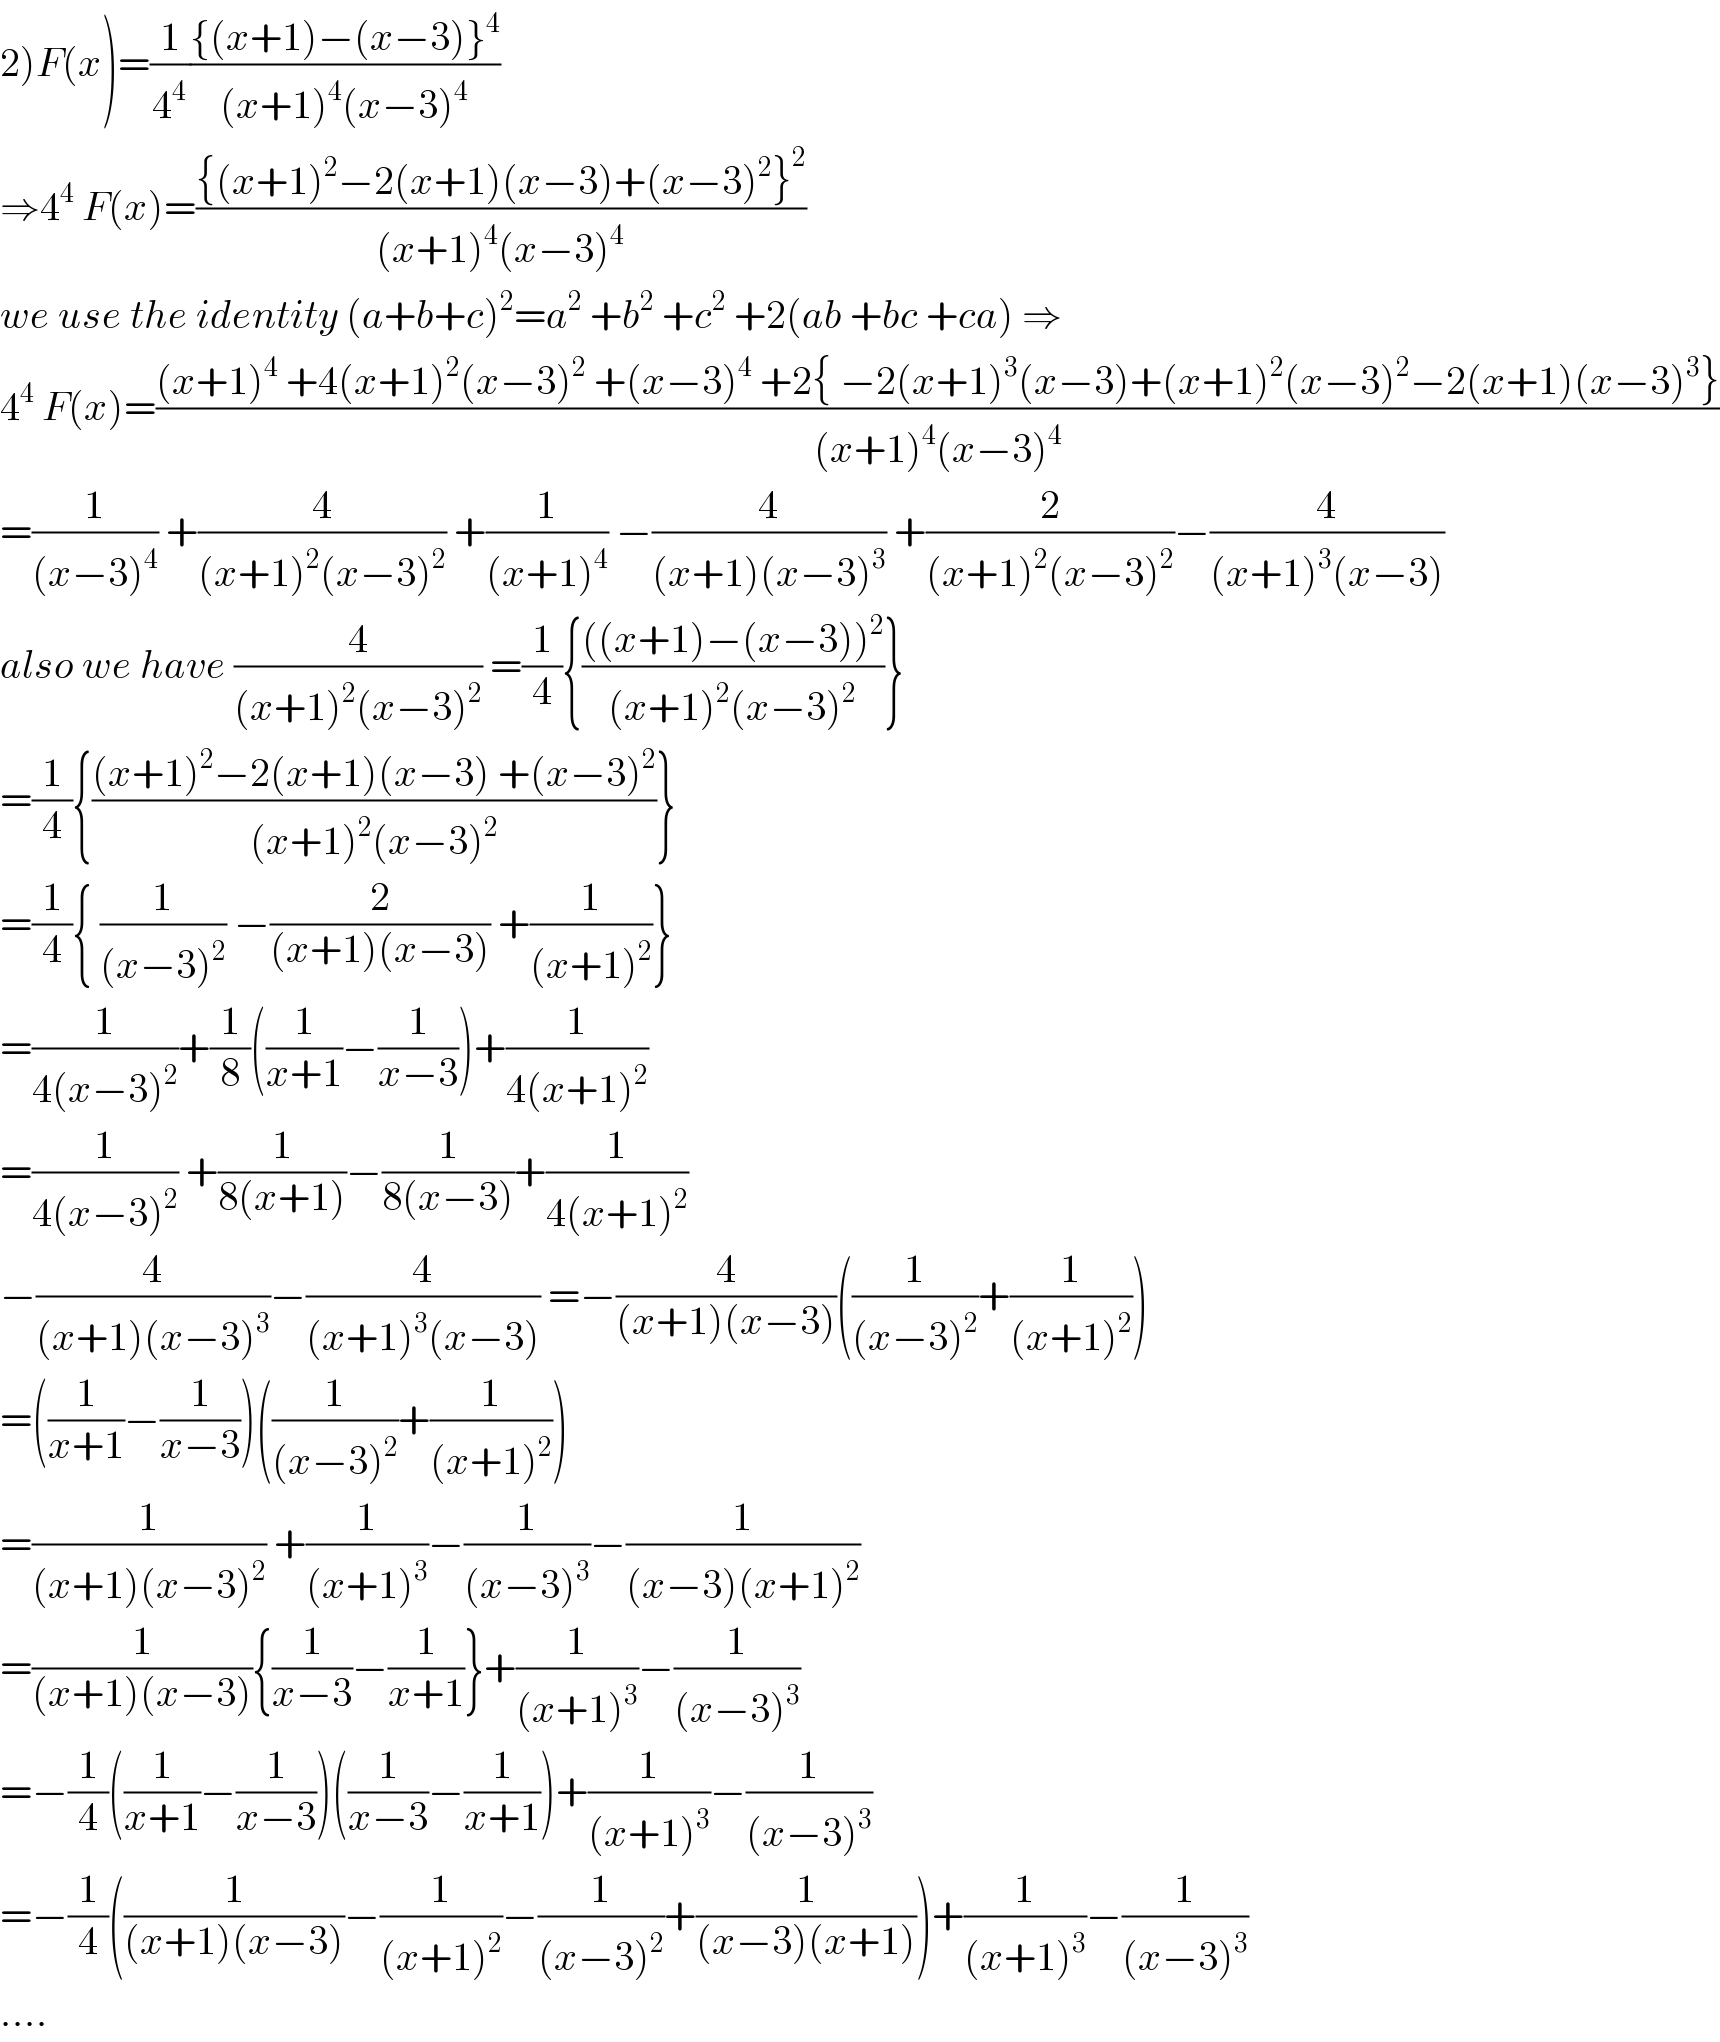 2)F(x)=(1/4^4 )(({(x+1)−(x−3)}^4 )/((x+1)^4 (x−3)^4 ))  ⇒4^4  F(x)=(({(x+1)^2 −2(x+1)(x−3)+(x−3)^2 }^2 )/((x+1)^4 (x−3)^4 ))  we use the identity (a+b+c)^2 =a^2  +b^2  +c^2  +2(ab +bc +ca) ⇒  4^4  F(x)=(((x+1)^4  +4(x+1)^2 (x−3)^2  +(x−3)^4  +2{ −2(x+1)^3 (x−3)+(x+1)^2 (x−3)^2 −2(x+1)(x−3)^3 })/((x+1)^4 (x−3)^4 ))  =(1/((x−3)^4 )) +(4/((x+1)^2 (x−3)^2 )) +(1/((x+1)^4 )) −(4/((x+1)(x−3)^3 )) +(2/((x+1)^2 (x−3)^2 ))−(4/((x+1)^3 (x−3)))  also we have (4/((x+1)^2 (x−3)^2 )) =(1/4){((((x+1)−(x−3))^2 )/((x+1)^2 (x−3)^2 ))}  =(1/4){(((x+1)^2 −2(x+1)(x−3) +(x−3)^2 )/((x+1)^2 (x−3)^2 ))}  =(1/4){ (1/((x−3)^2 )) −(2/((x+1)(x−3))) +(1/((x+1)^2 ))}  =(1/(4(x−3)^2 ))+(1/8)((1/(x+1))−(1/(x−3)))+(1/(4(x+1)^2 ))  =(1/(4(x−3)^2 )) +(1/(8(x+1)))−(1/(8(x−3)))+(1/(4(x+1)^2 ))  −(4/((x+1)(x−3)^3 ))−(4/((x+1)^3 (x−3))) =−(4/((x+1)(x−3)))((1/((x−3)^2 ))+(1/((x+1)^2 )))  =((1/(x+1))−(1/(x−3)))((1/((x−3)^2 ))+(1/((x+1)^2 )))  =(1/((x+1)(x−3)^2 )) +(1/((x+1)^3 ))−(1/((x−3)^3 ))−(1/((x−3)(x+1)^2 ))  =(1/((x+1)(x−3))){(1/(x−3))−(1/(x+1))}+(1/((x+1)^3 ))−(1/((x−3)^3 ))  =−(1/4)((1/(x+1))−(1/(x−3)))((1/(x−3))−(1/(x+1)))+(1/((x+1)^3 ))−(1/((x−3)^3 ))  =−(1/4)((1/((x+1)(x−3)))−(1/((x+1)^2 ))−(1/((x−3)^2 ))+(1/((x−3)(x+1))))+(1/((x+1)^3 ))−(1/((x−3)^3 ))  ....  